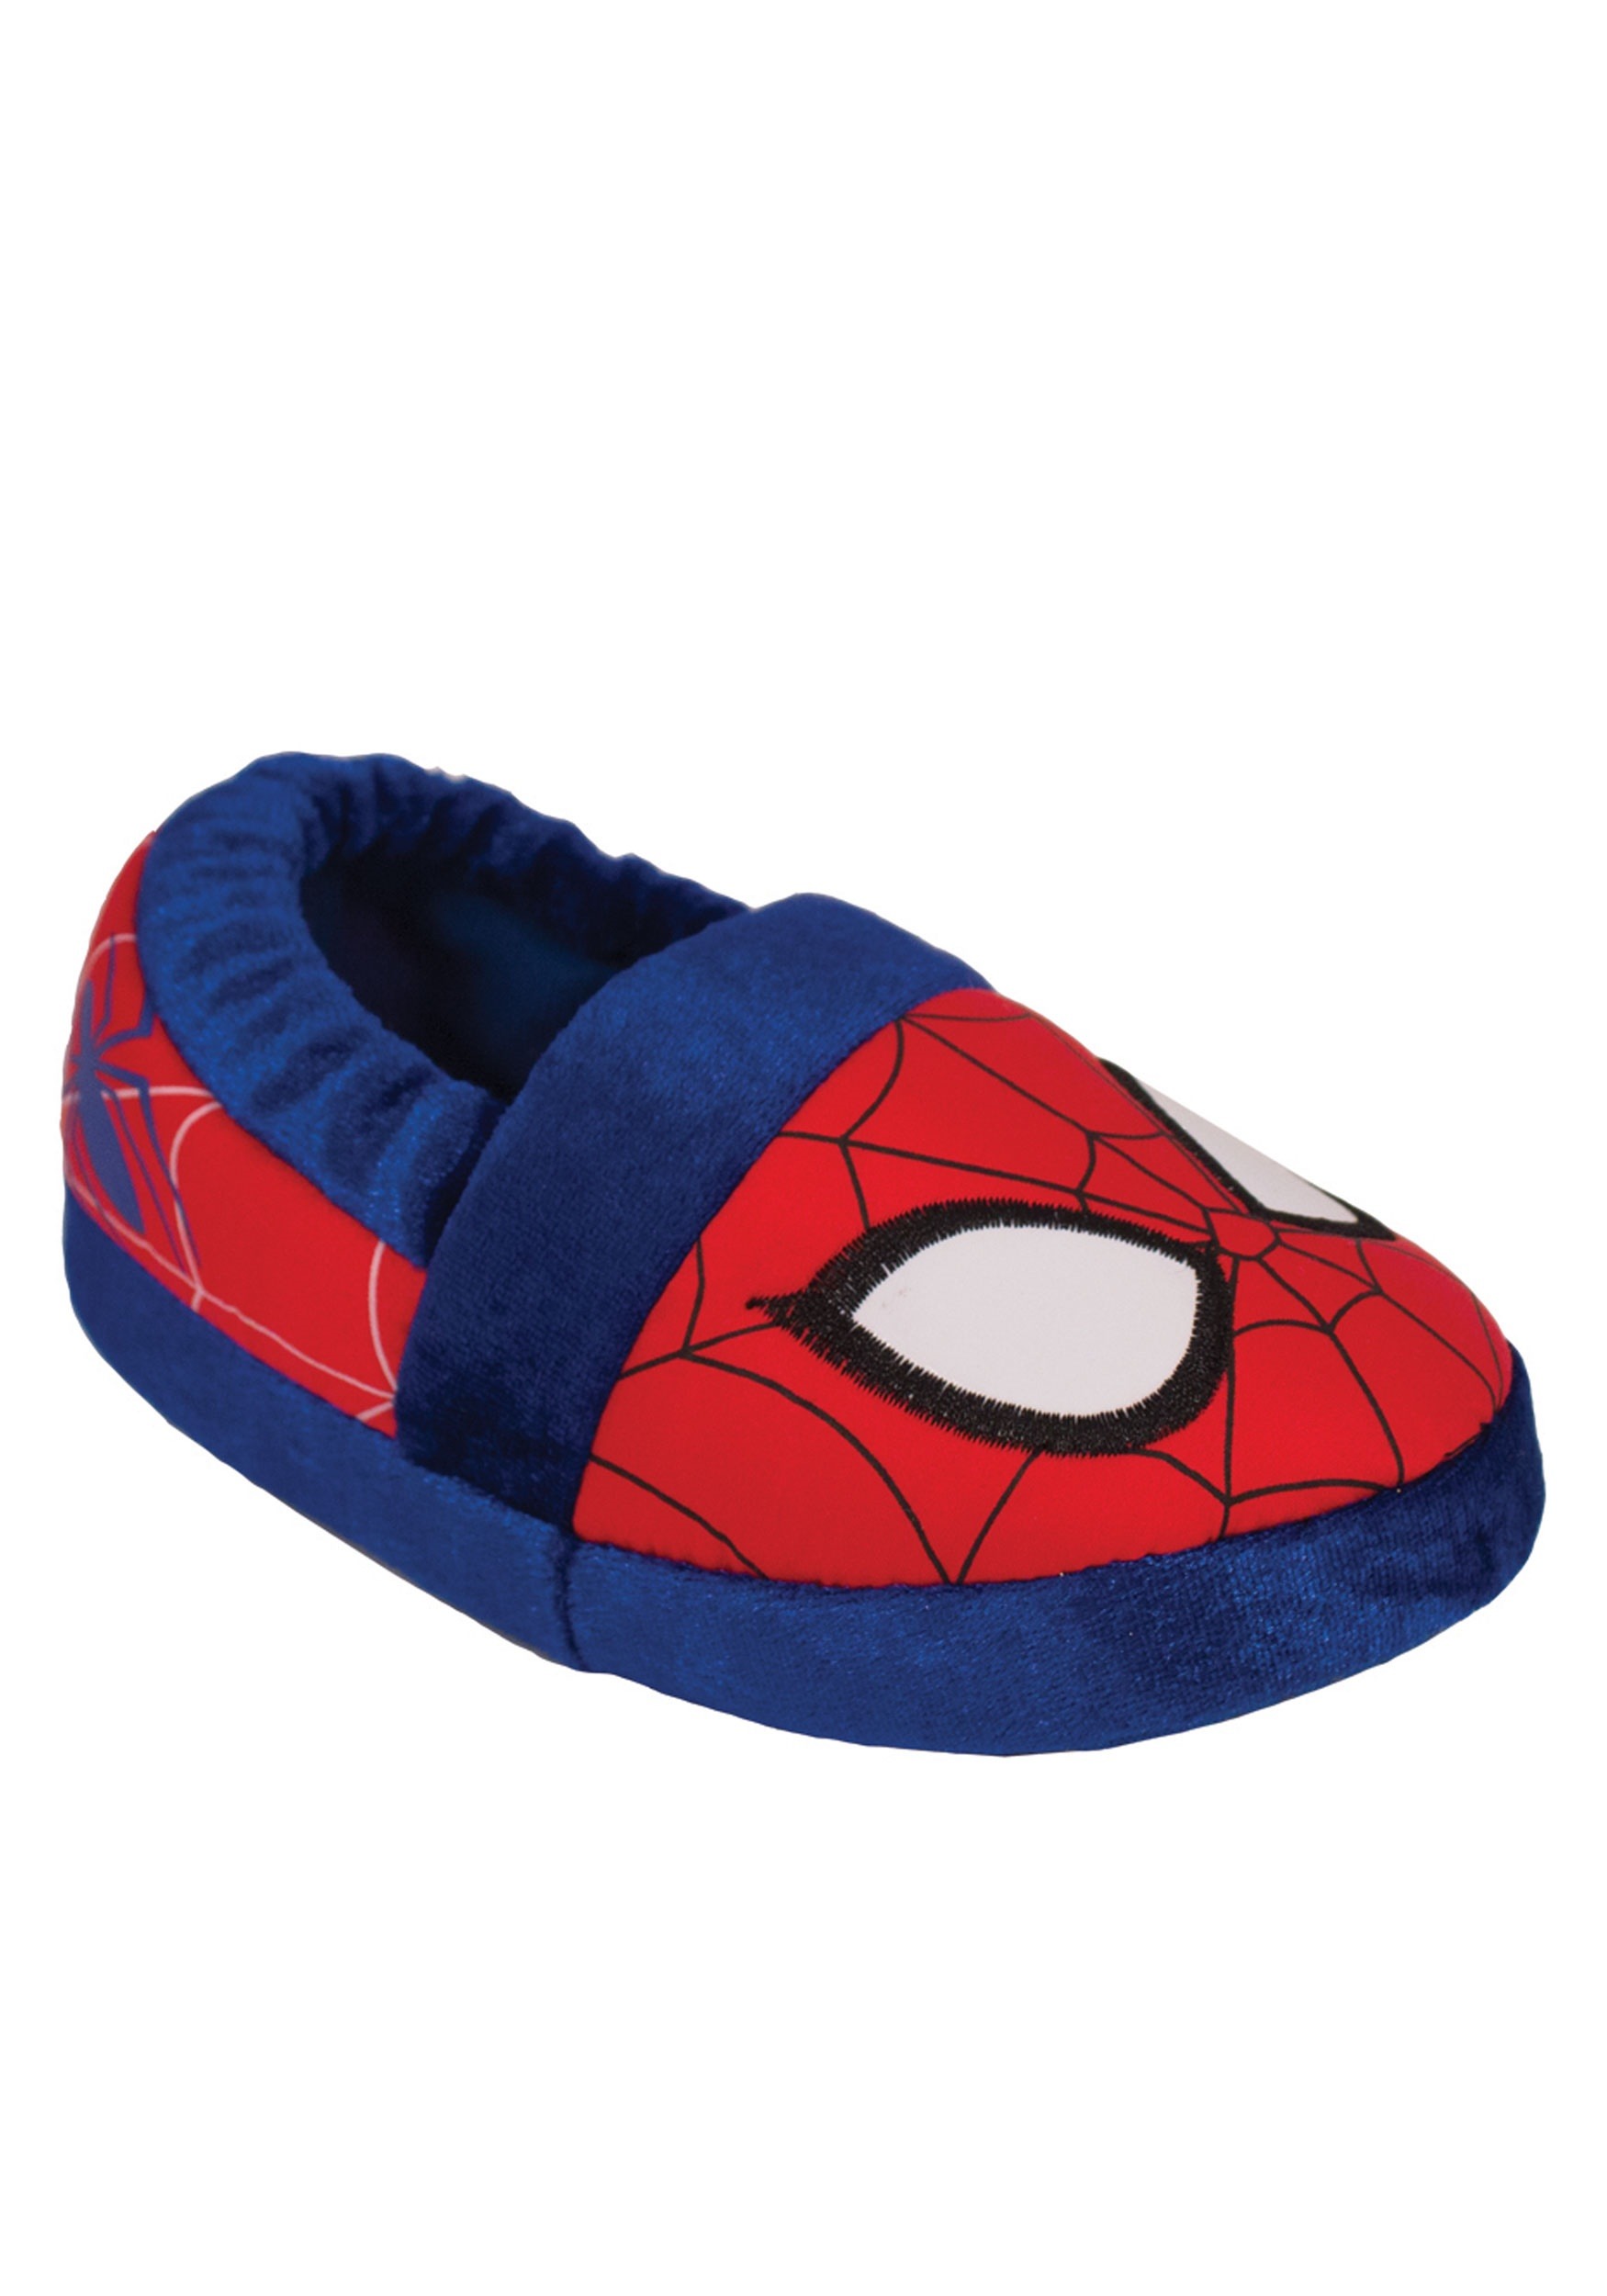 Kid's Spiderman Slippers